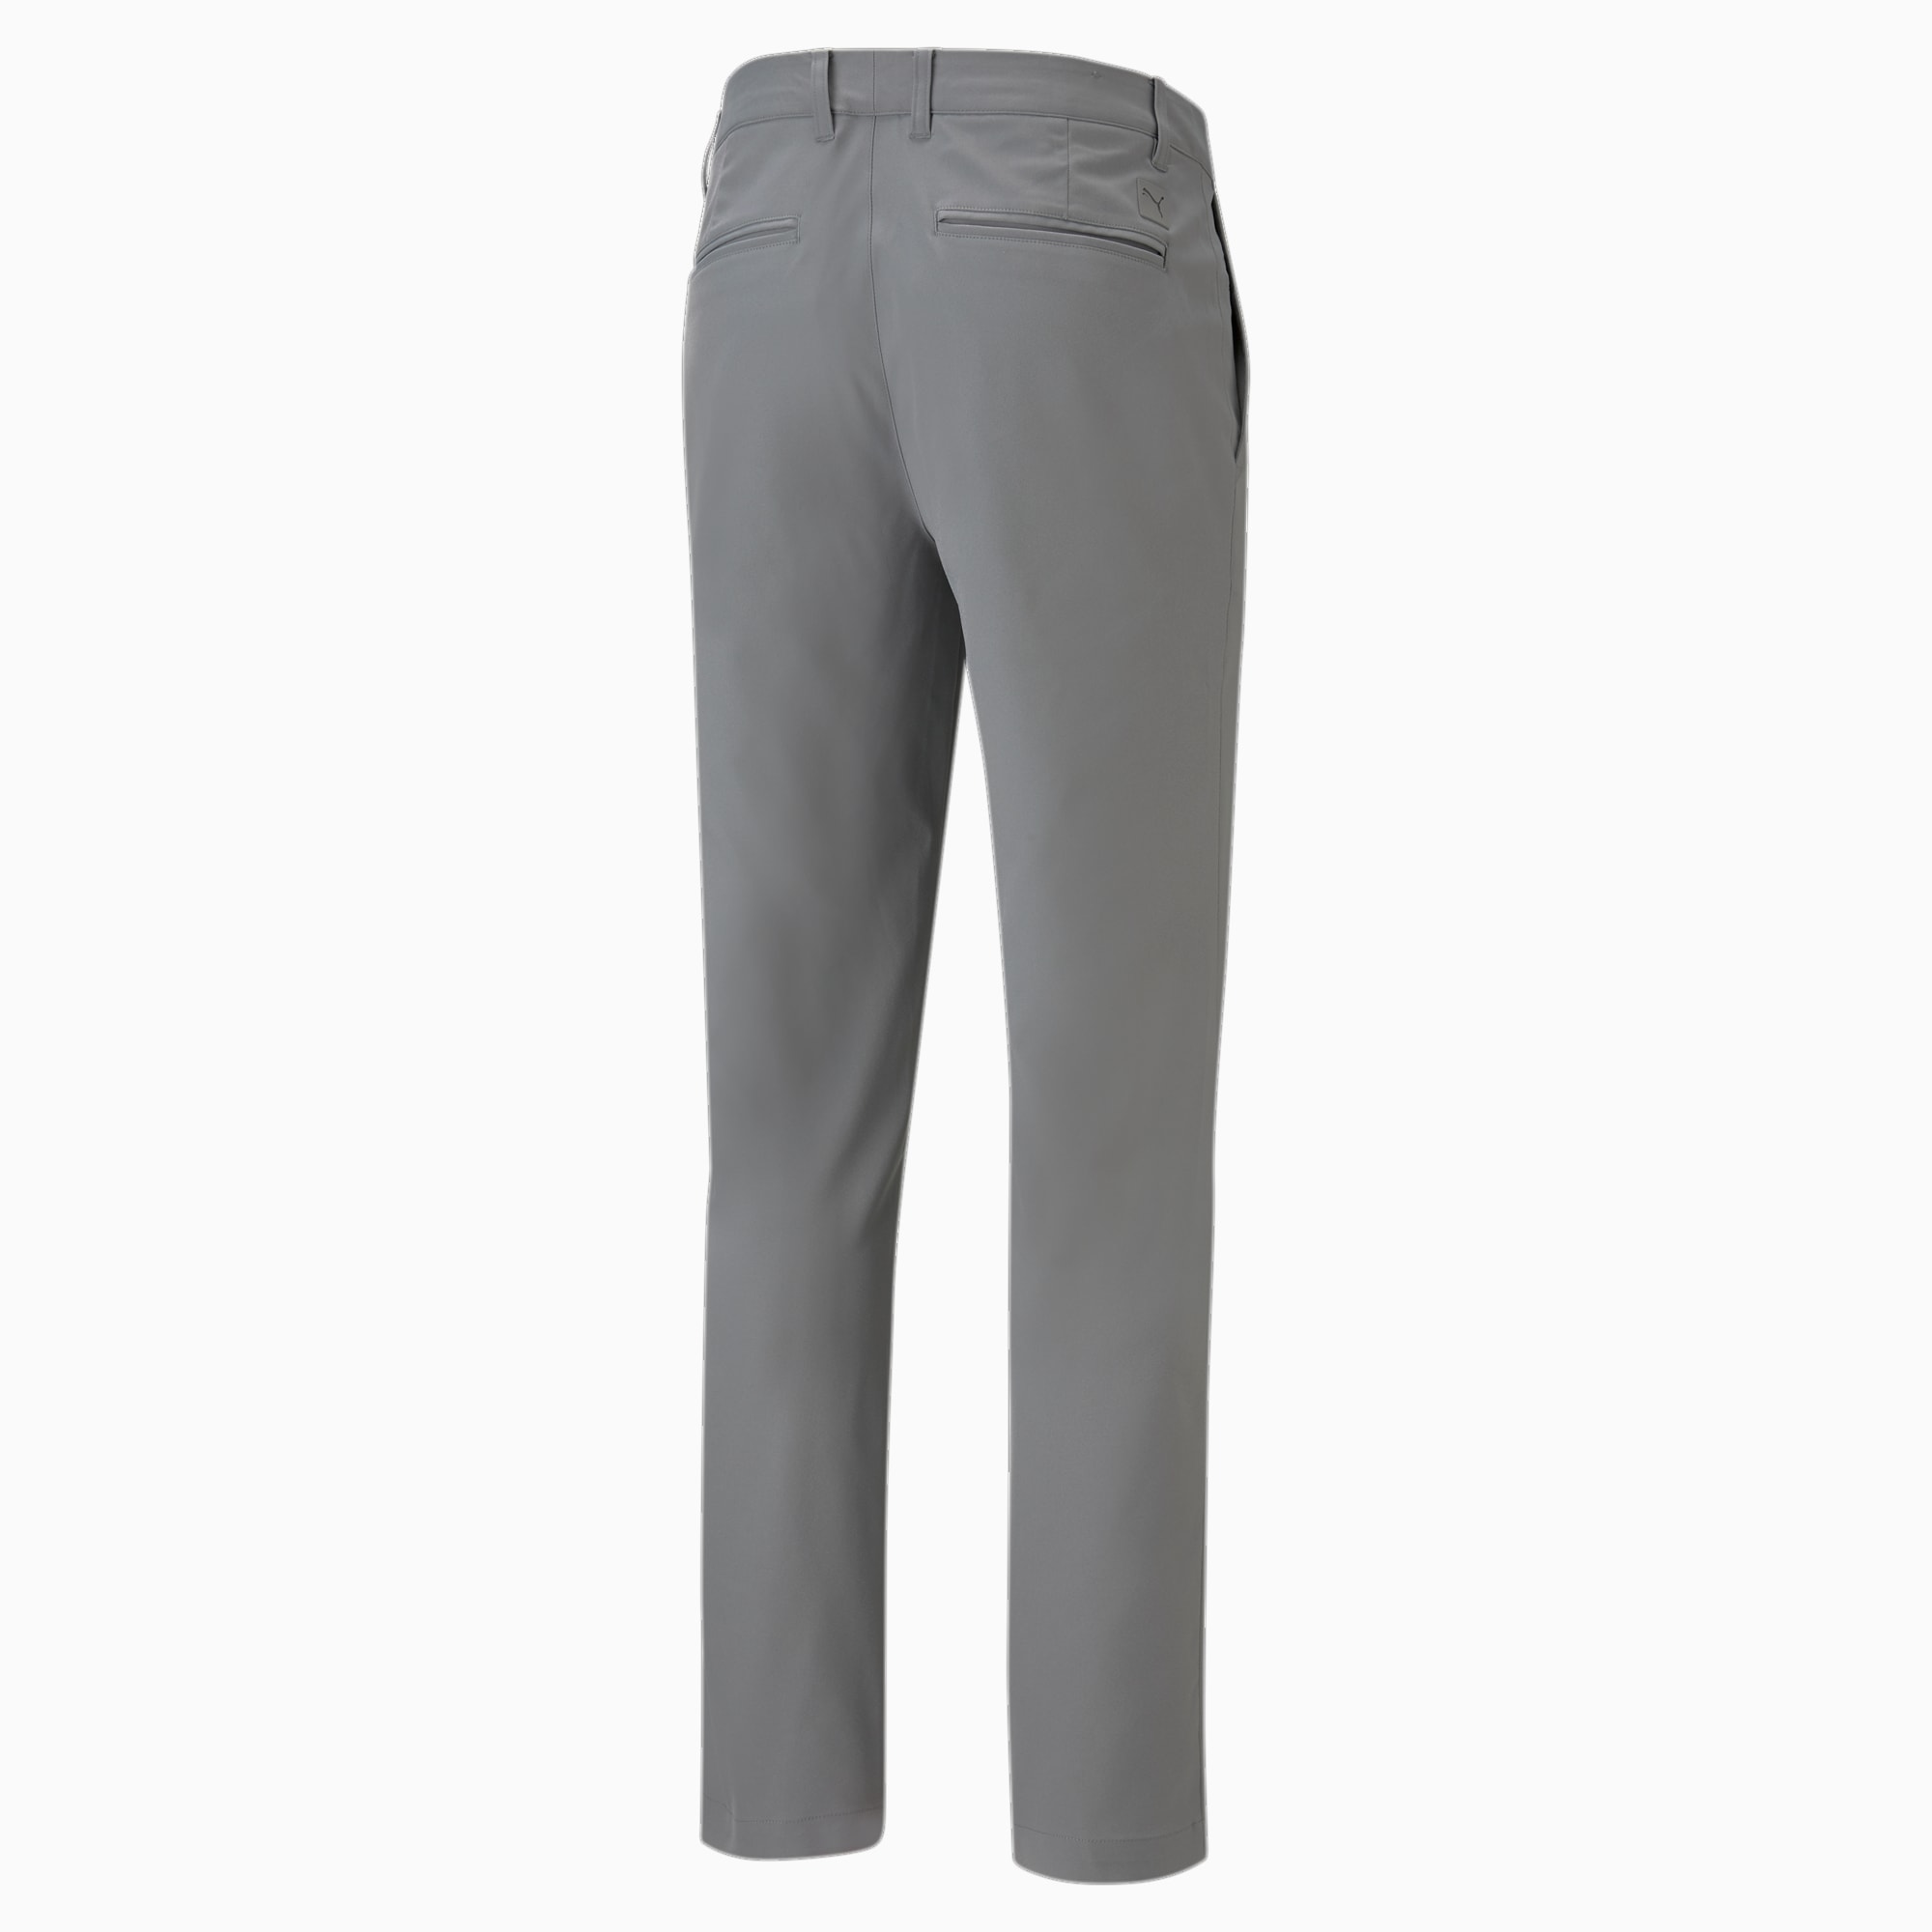 PUMA Dealer Tailored Golf Pants Men, Slate Sky, Size 36/30, Clothing